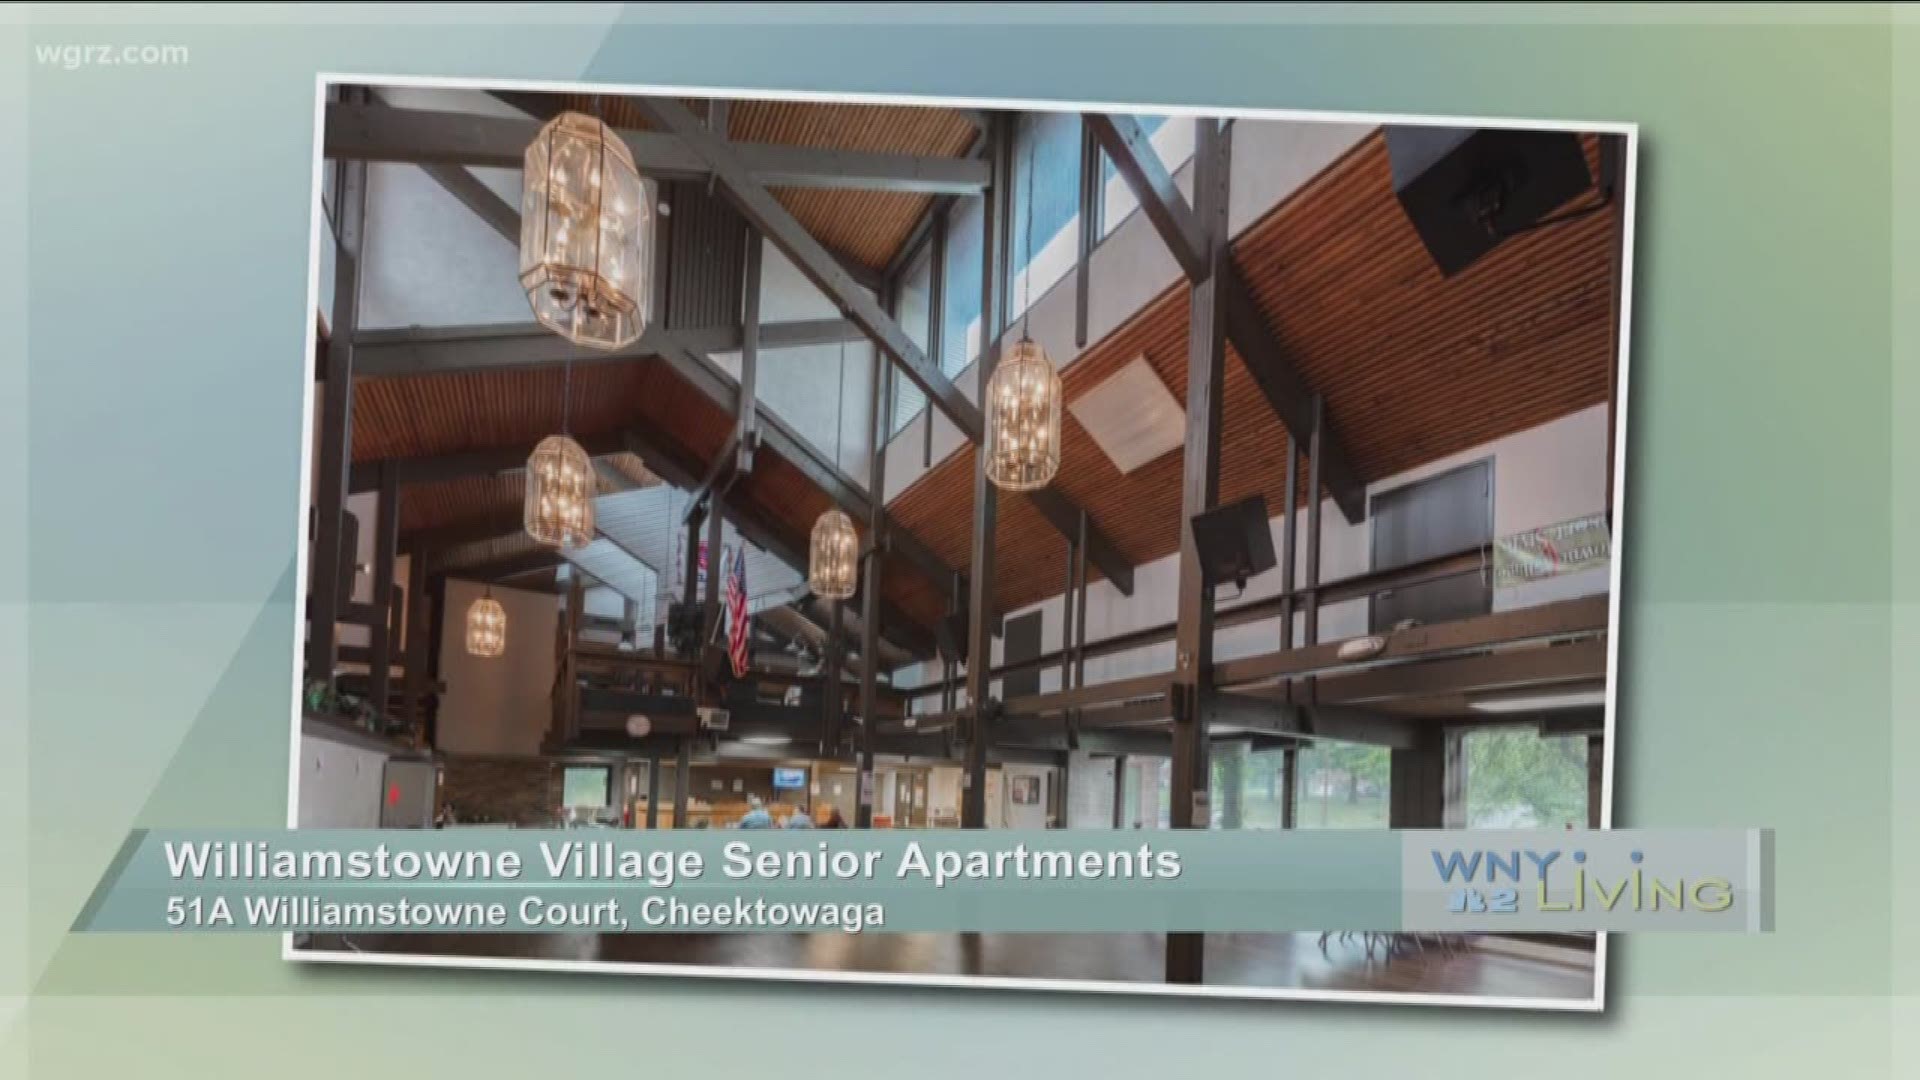 WNY Living - June 11 - WECK Williamstowne Village Senior Apartments